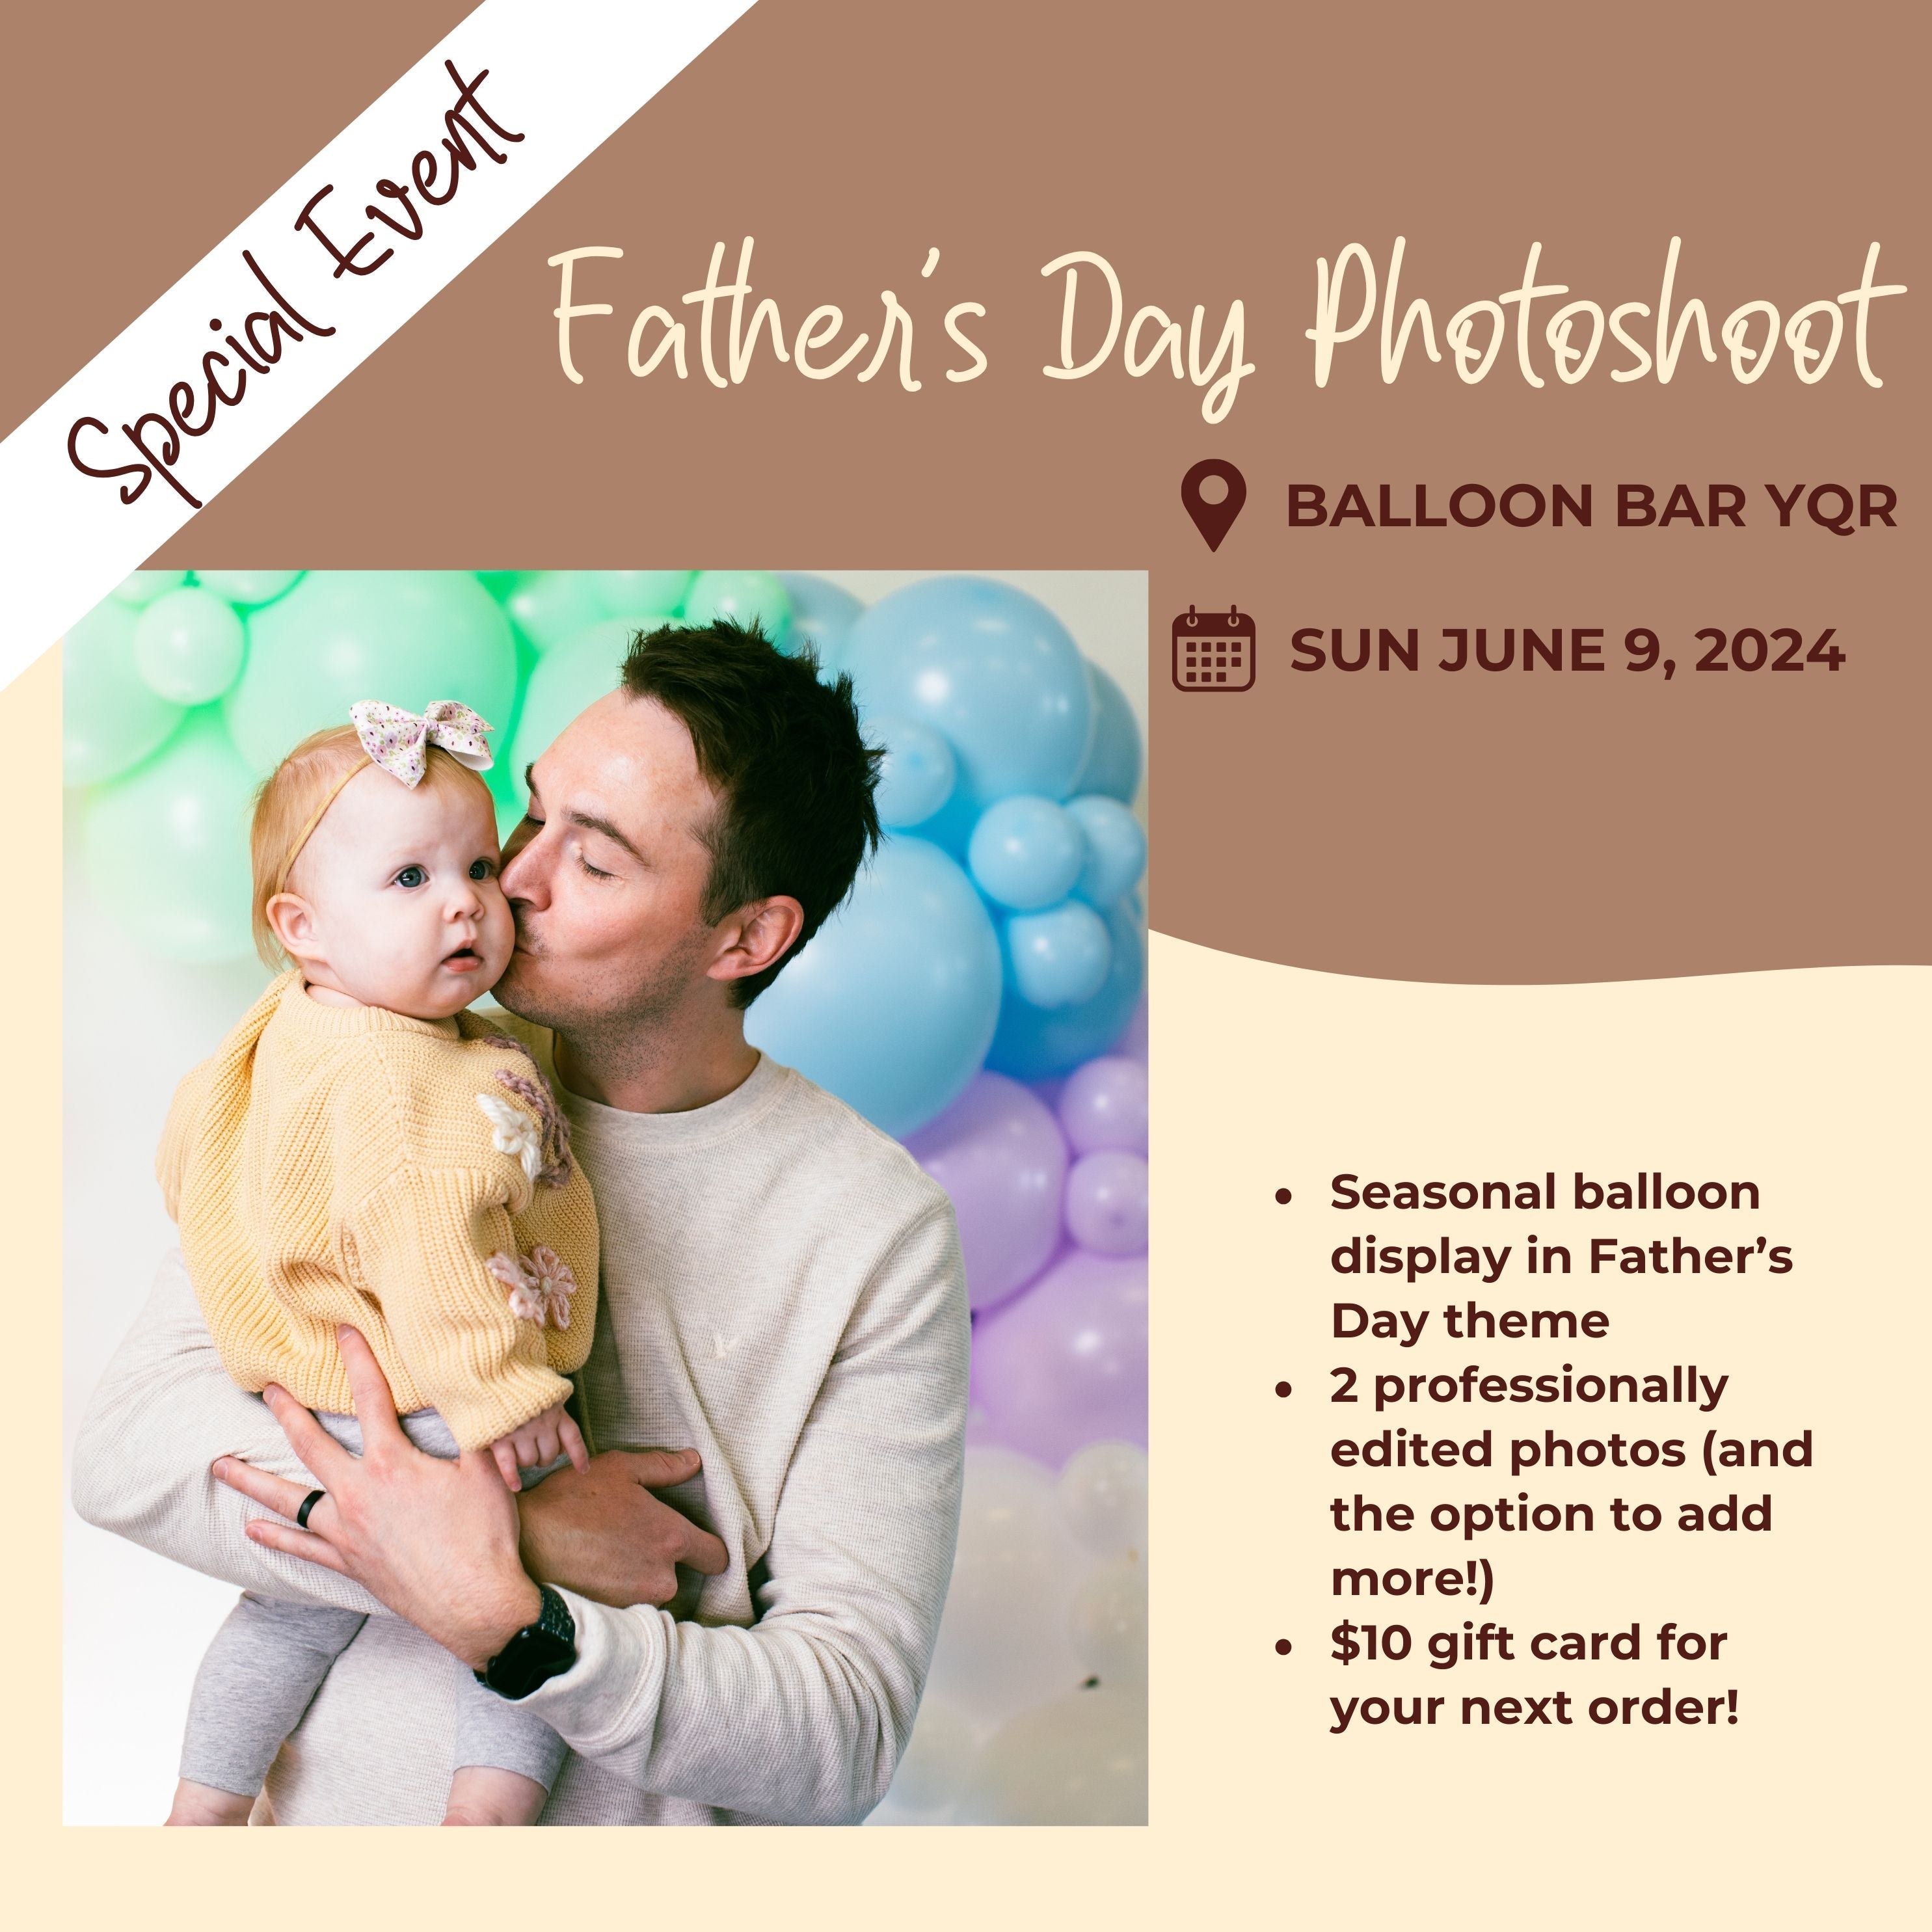 Seasonal Father's Day Photoshoot - Sunday June 9, 2024